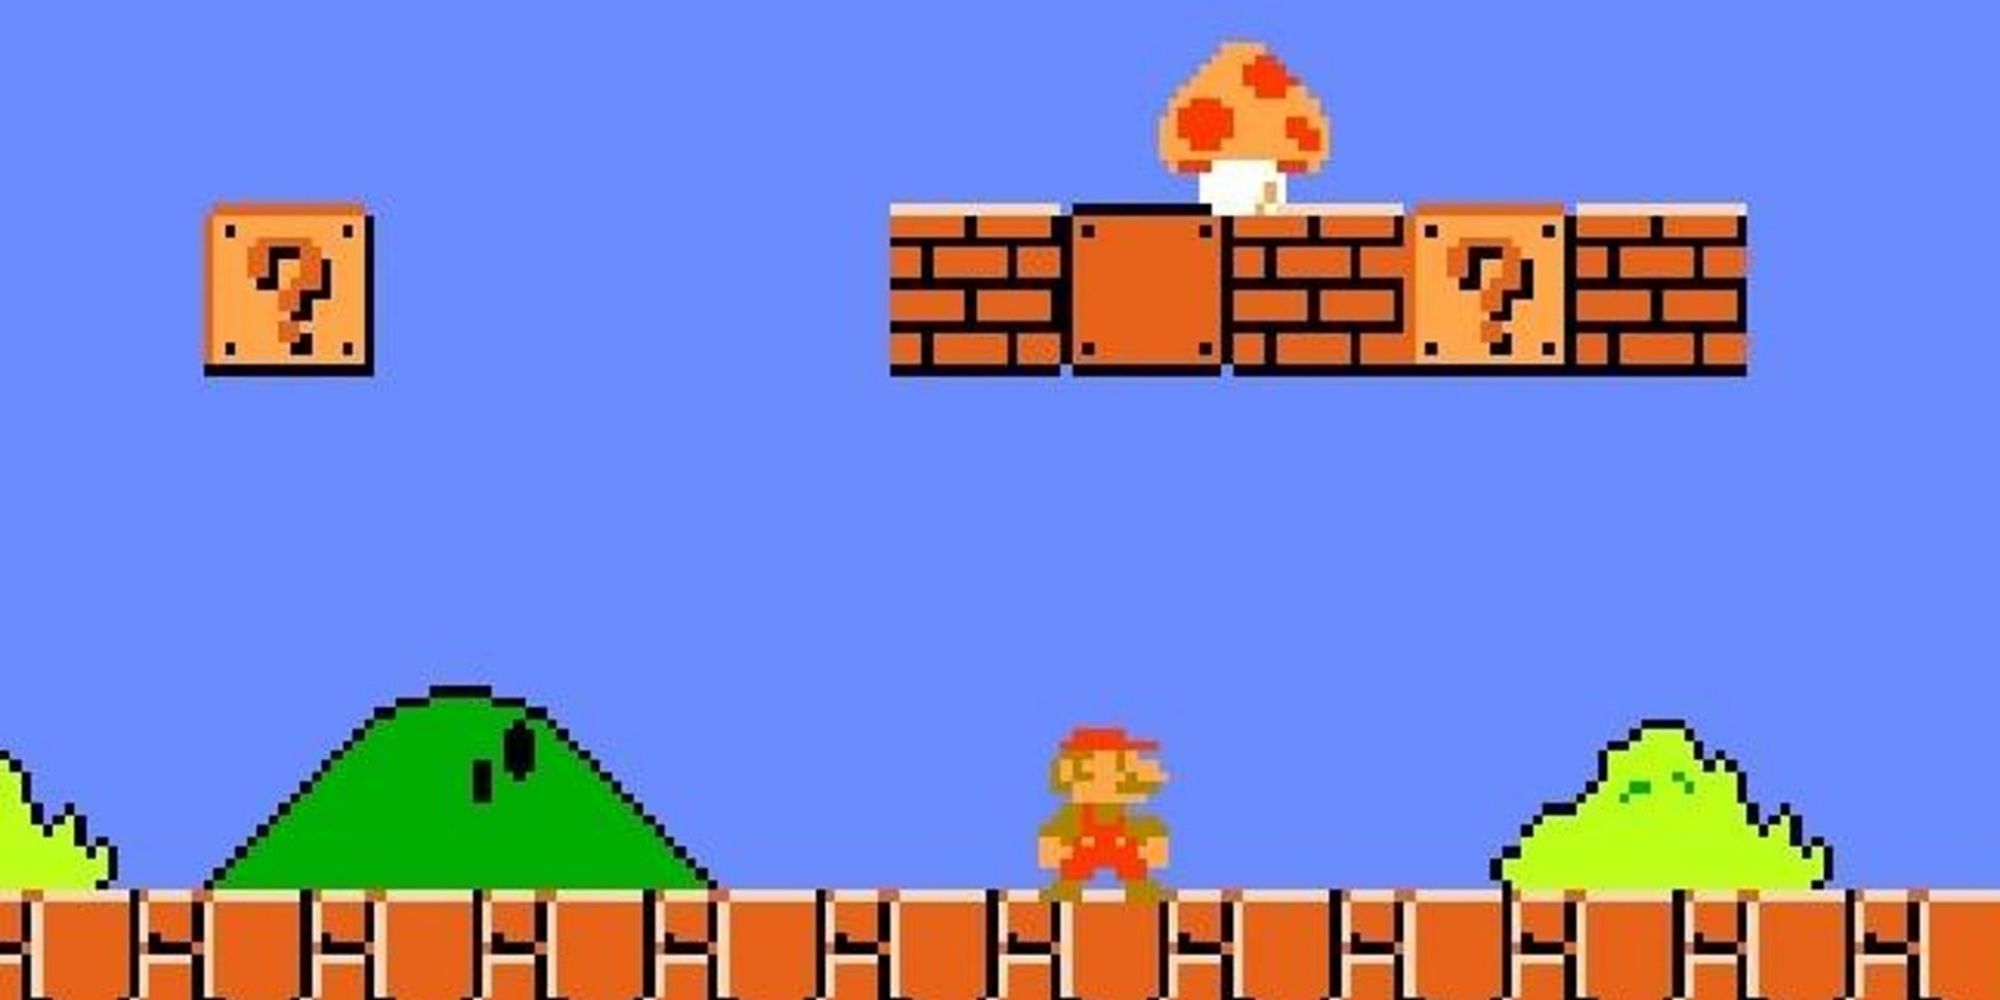 Super Mario Standing Underneath Blocks Awaiting Mushroom